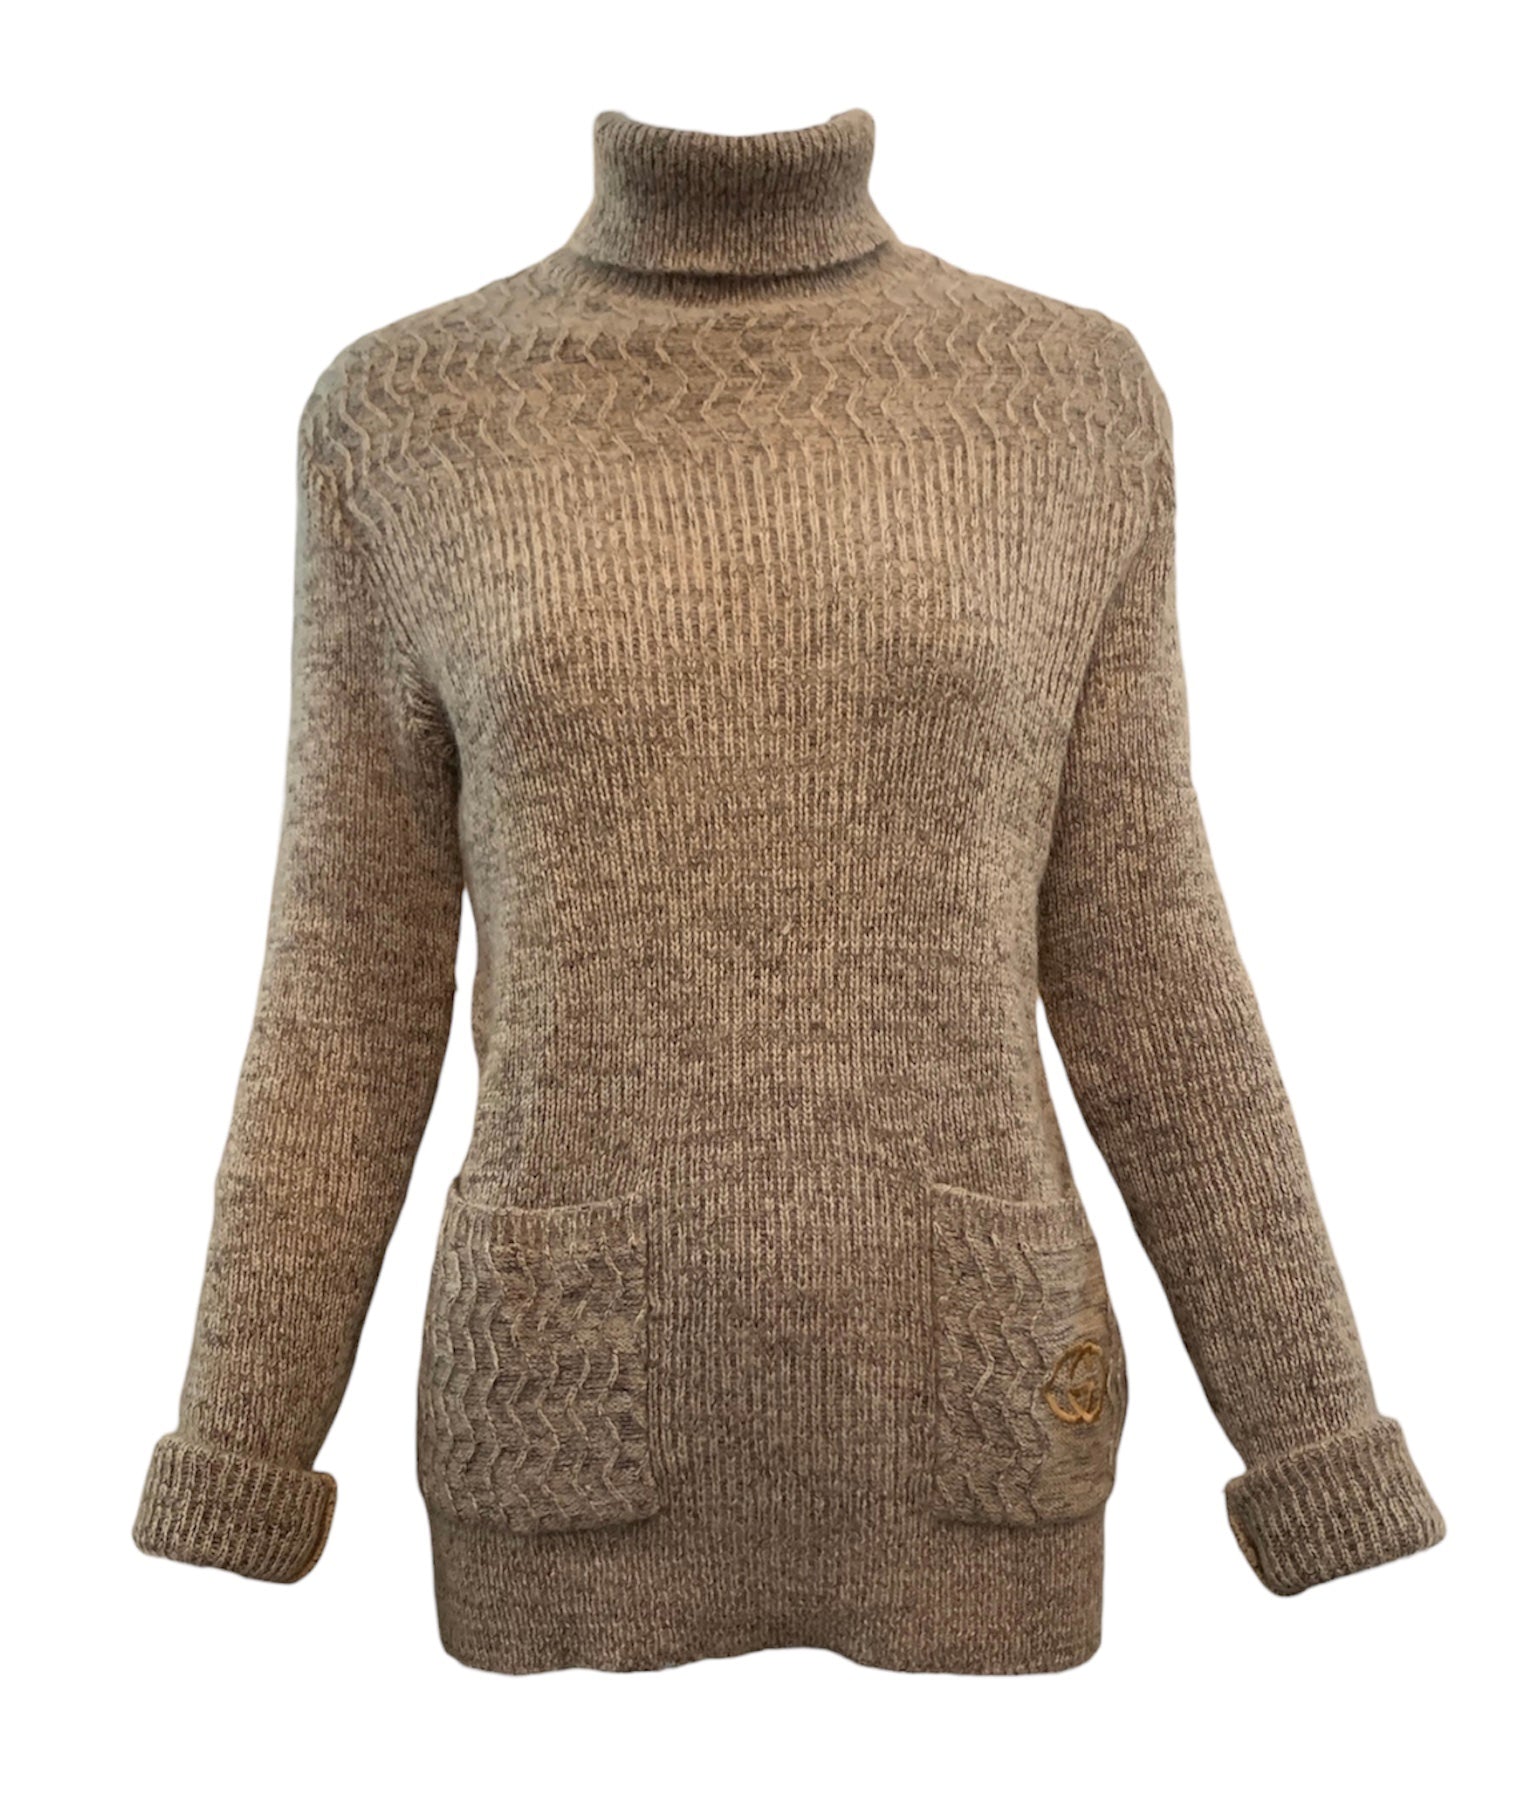 Gucci 1970s Alpaca/Cashmere Turtleneck Sweater FRONT 1 of 6